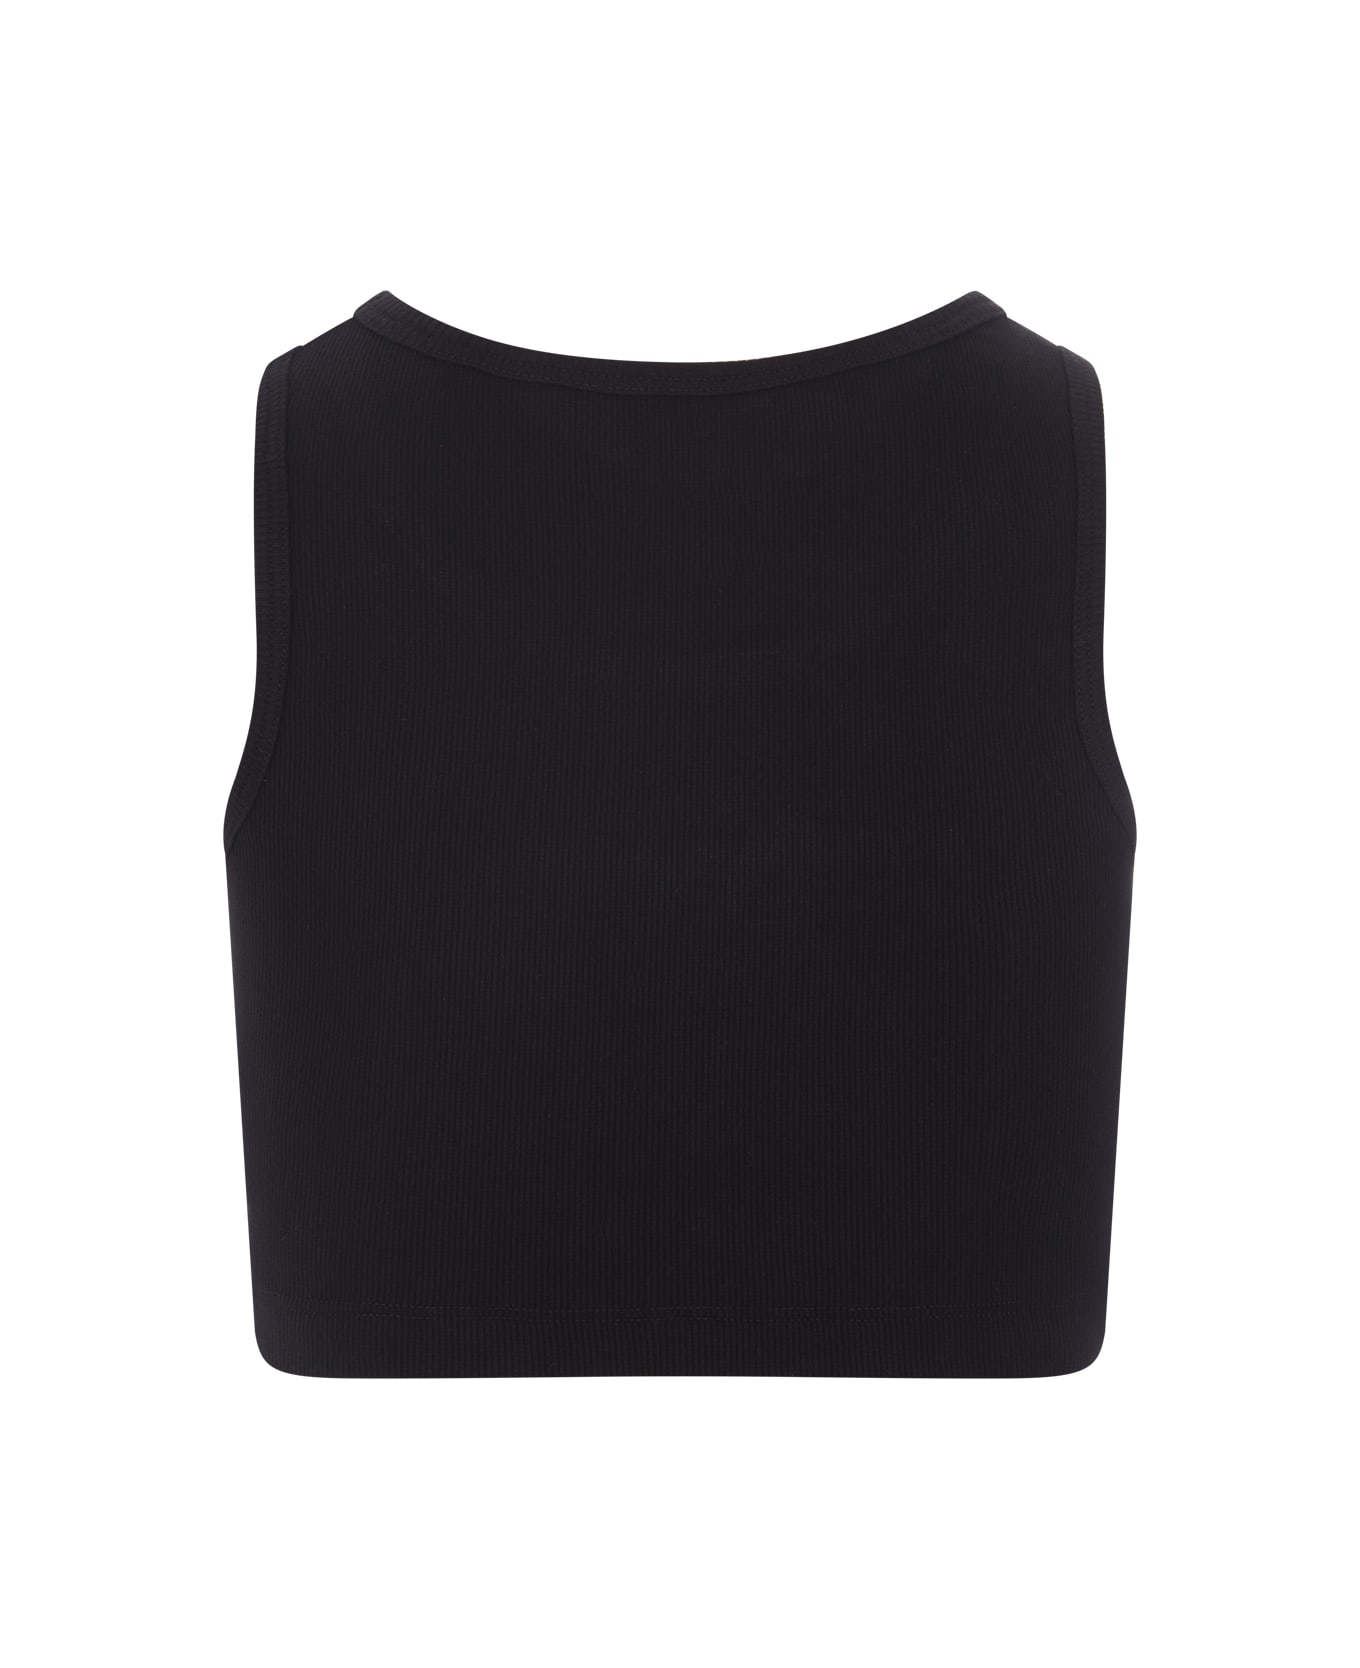 Paco Rabanne Black Crop Top With White Logo - Black